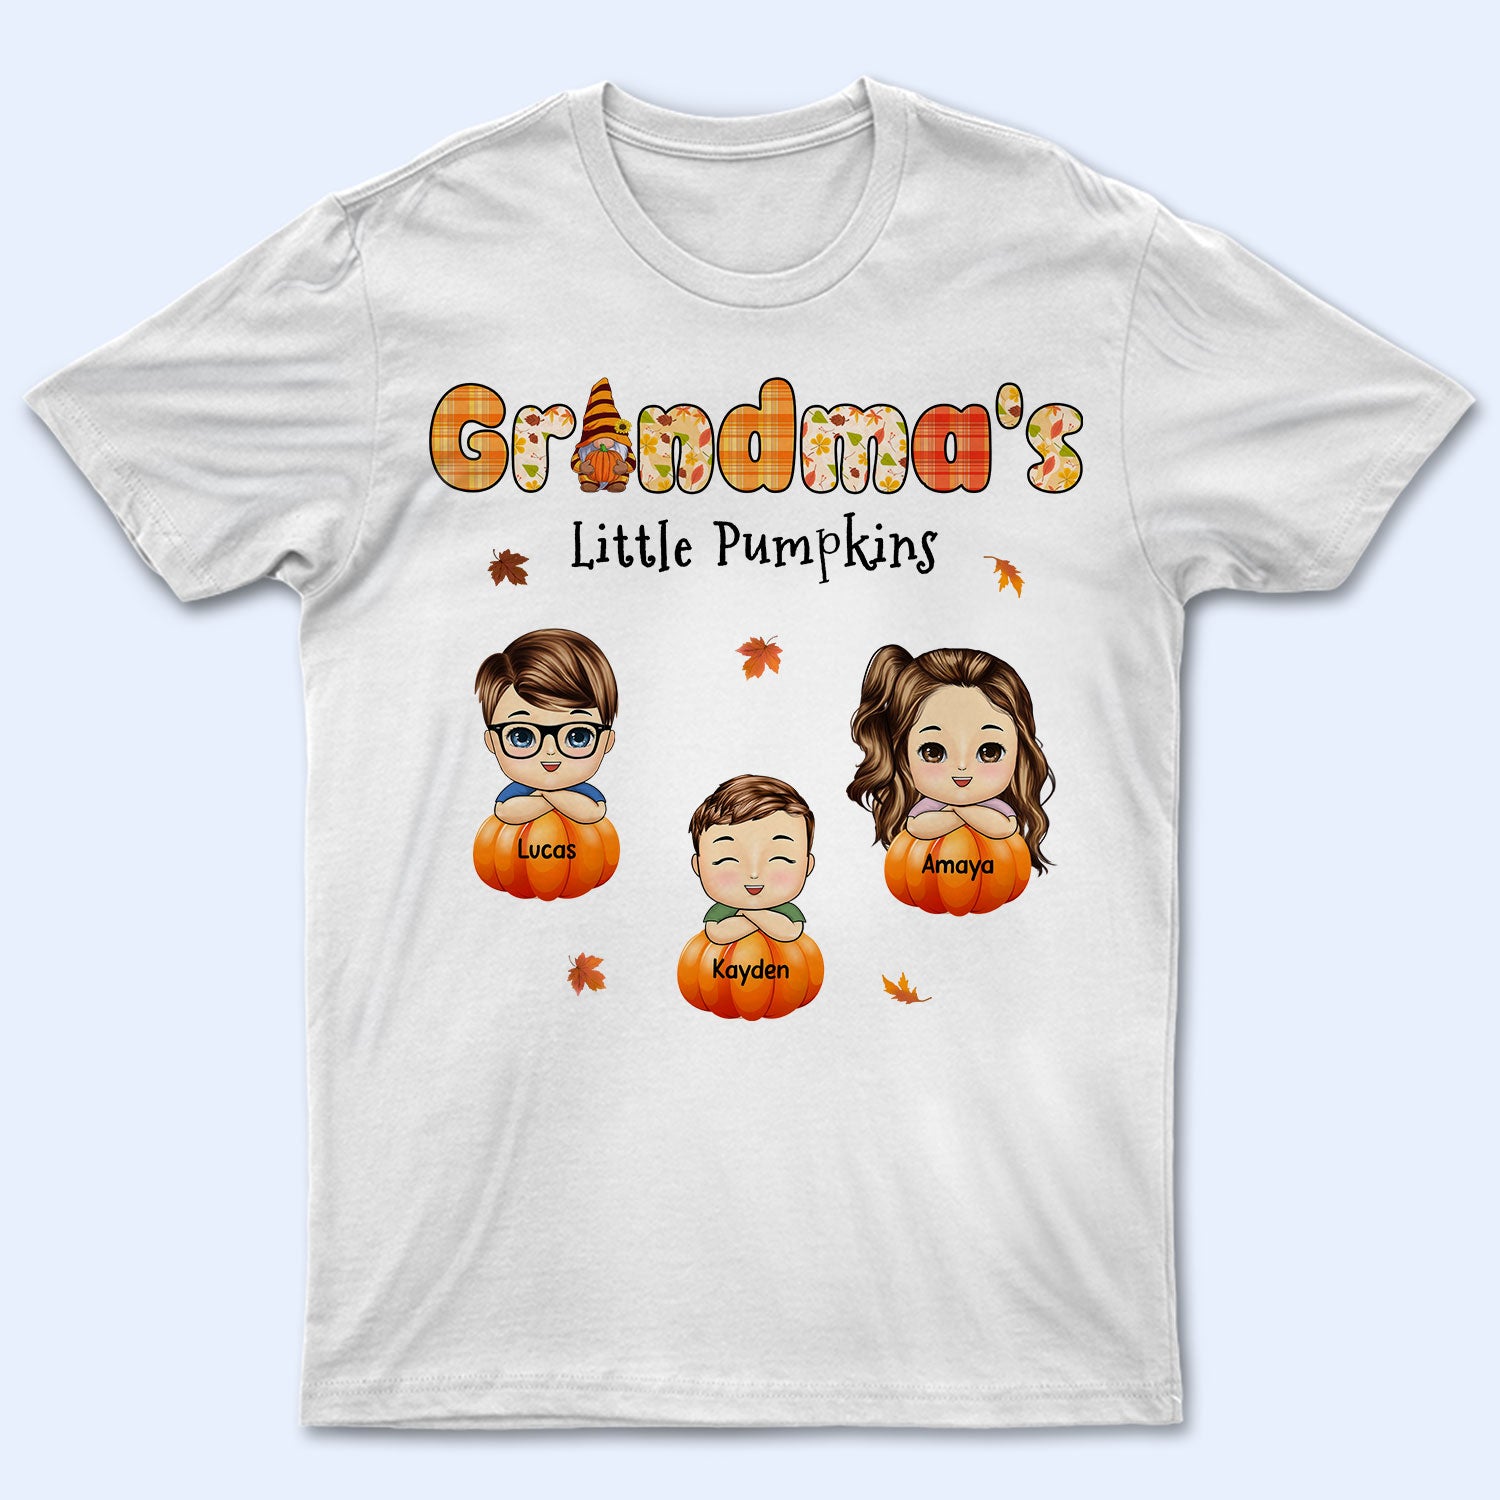 Grandma's Little Pumpkins - Birthday, Loving, Fall Season Gift For Grandma, Grandmother, Mom, Mother - Personalized T Shirt